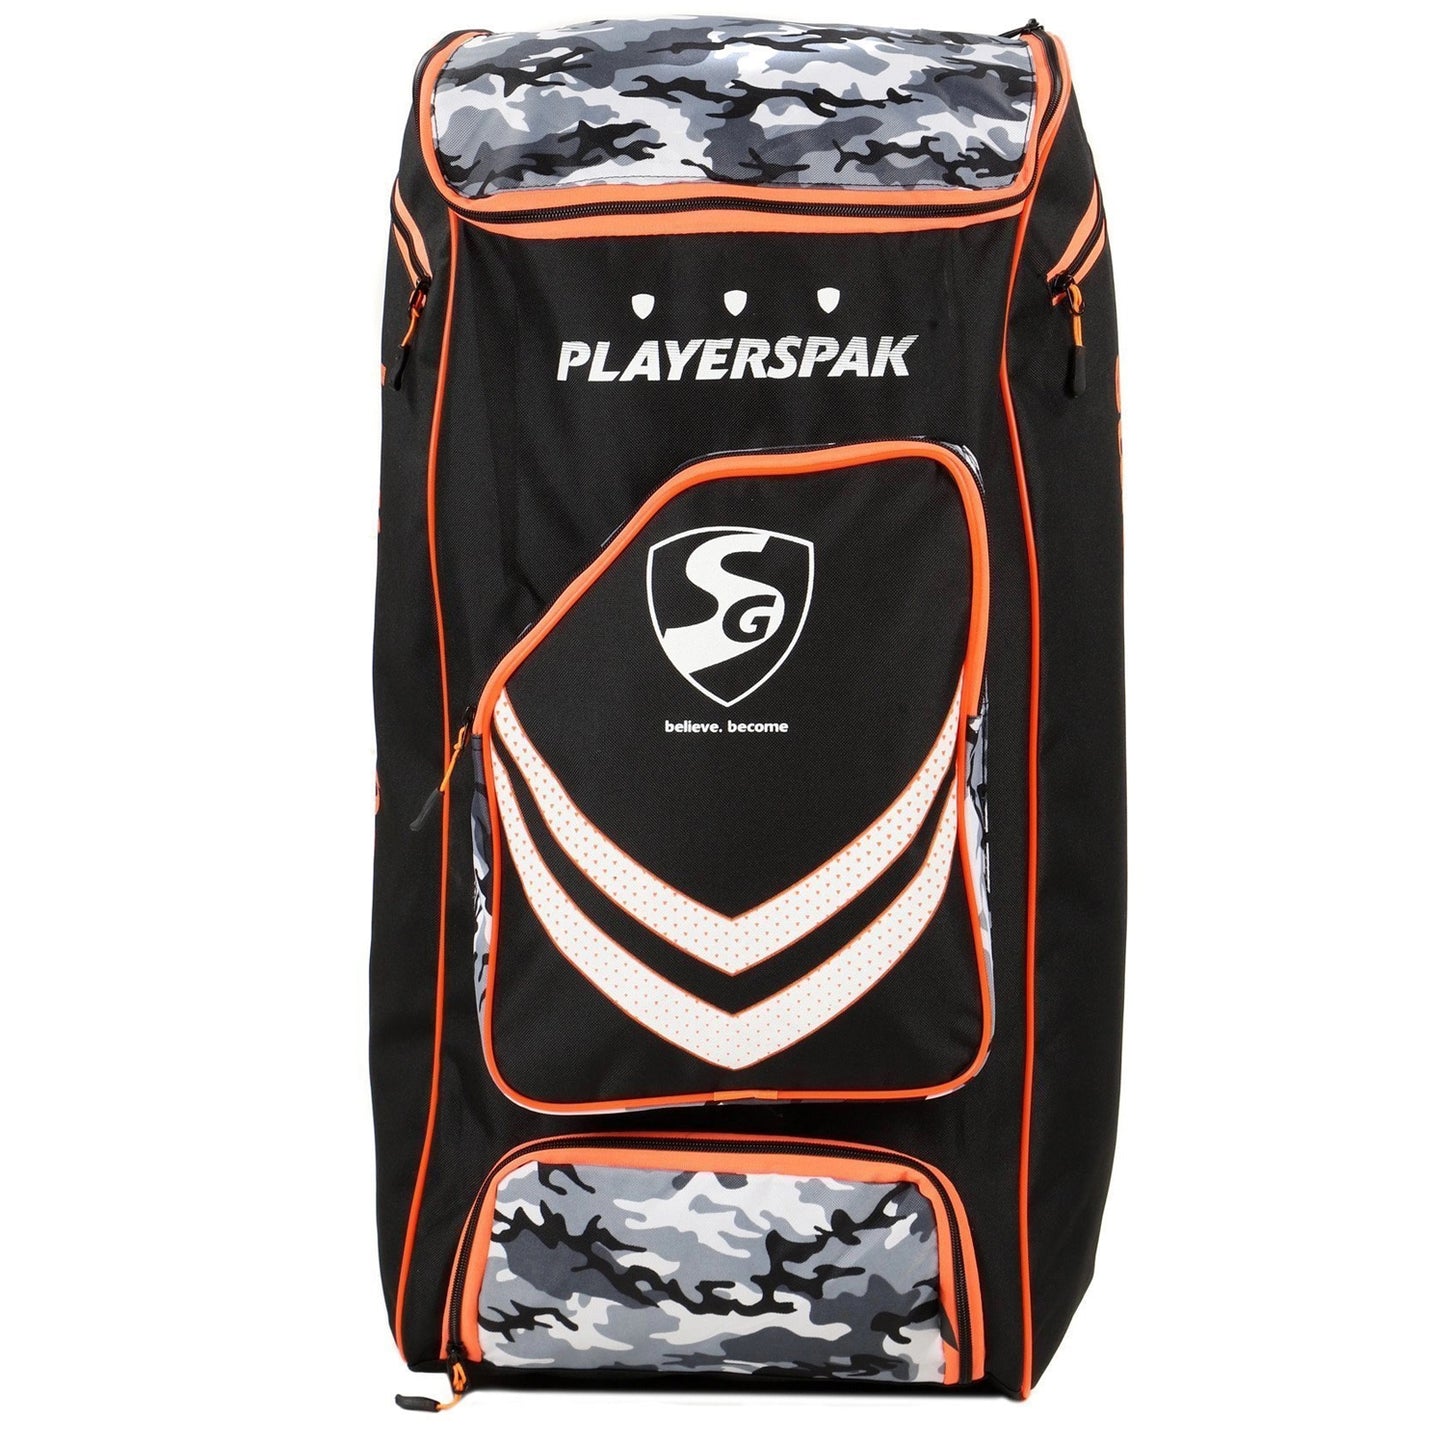 SG PRO PLAYERSPAK Cricket Kitbag, Large -Black/Orange - Best Price online Prokicksports.com